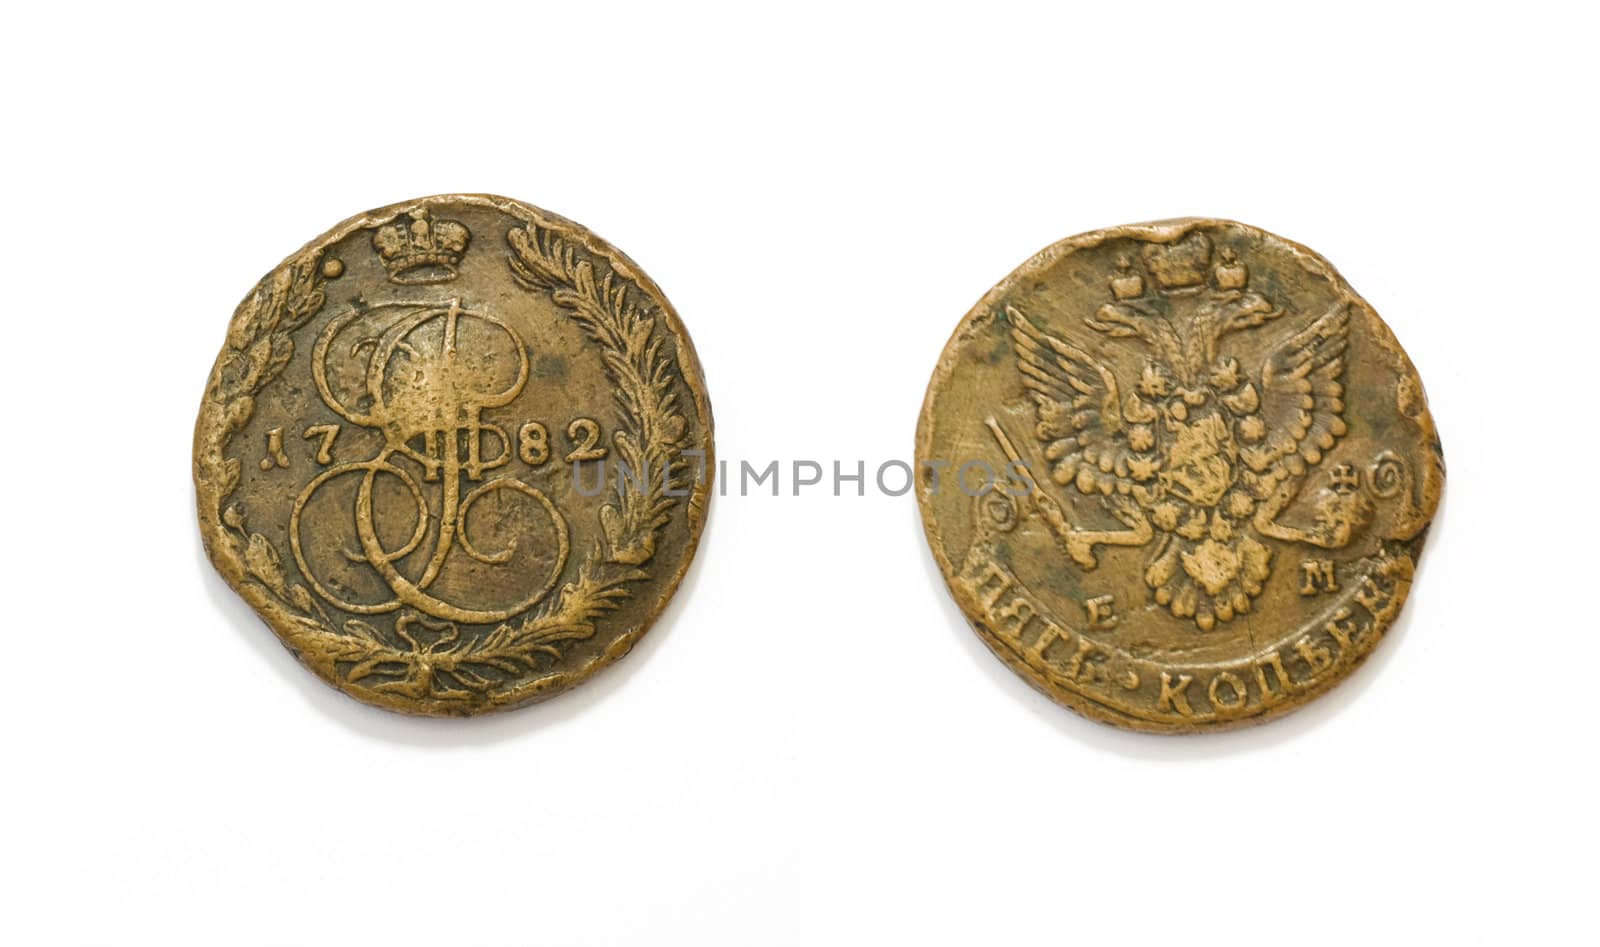 Coin of Russian Empire 18th century 1782 by ursolv